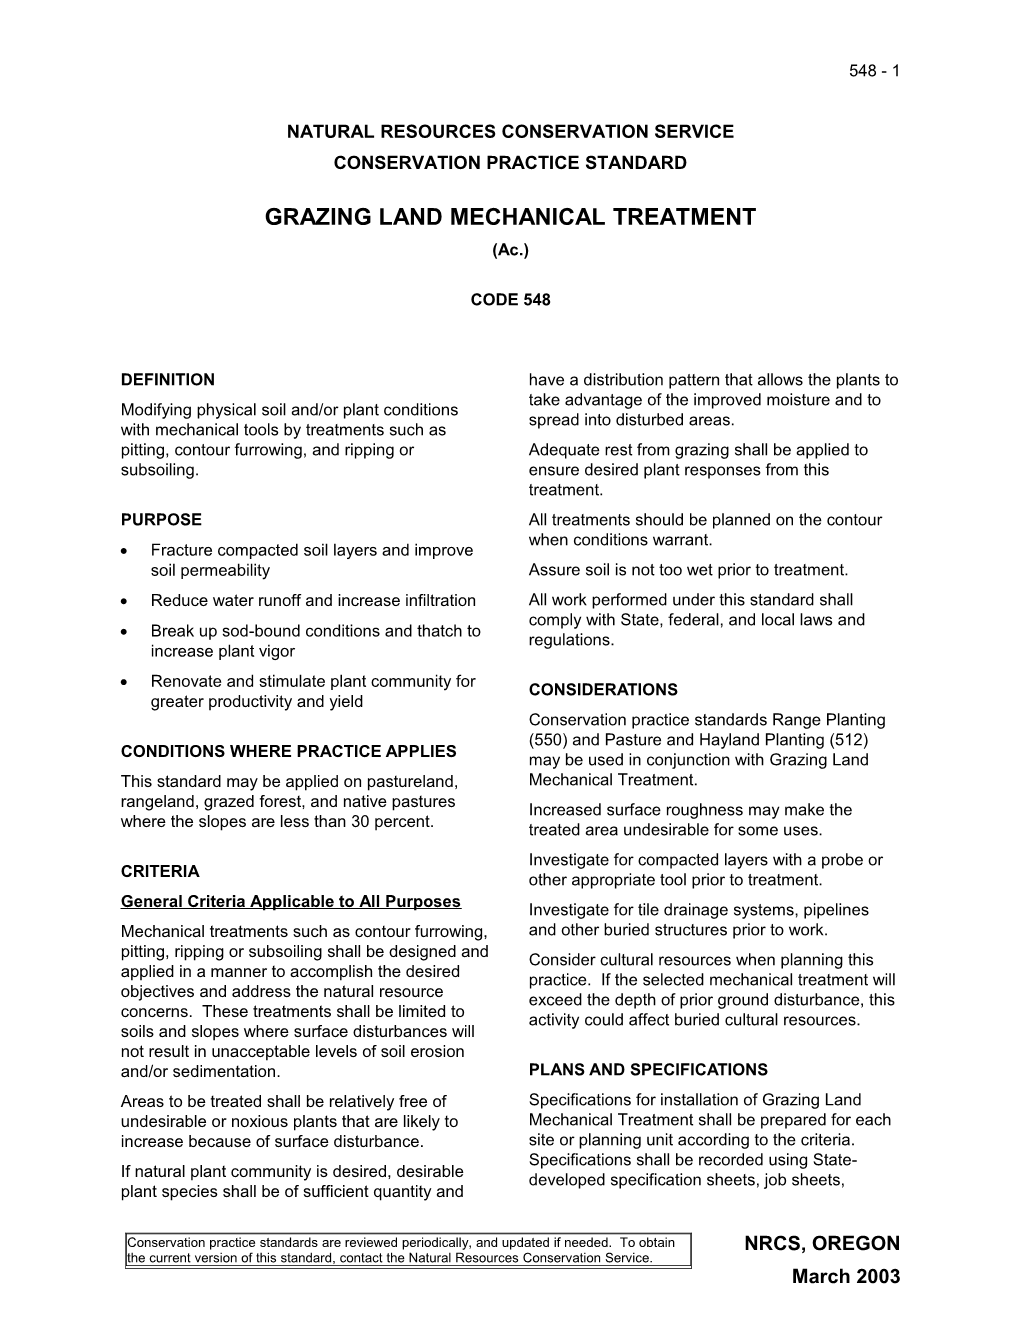 548 Grazing Land Mechanical Treatment Std. 3-2003